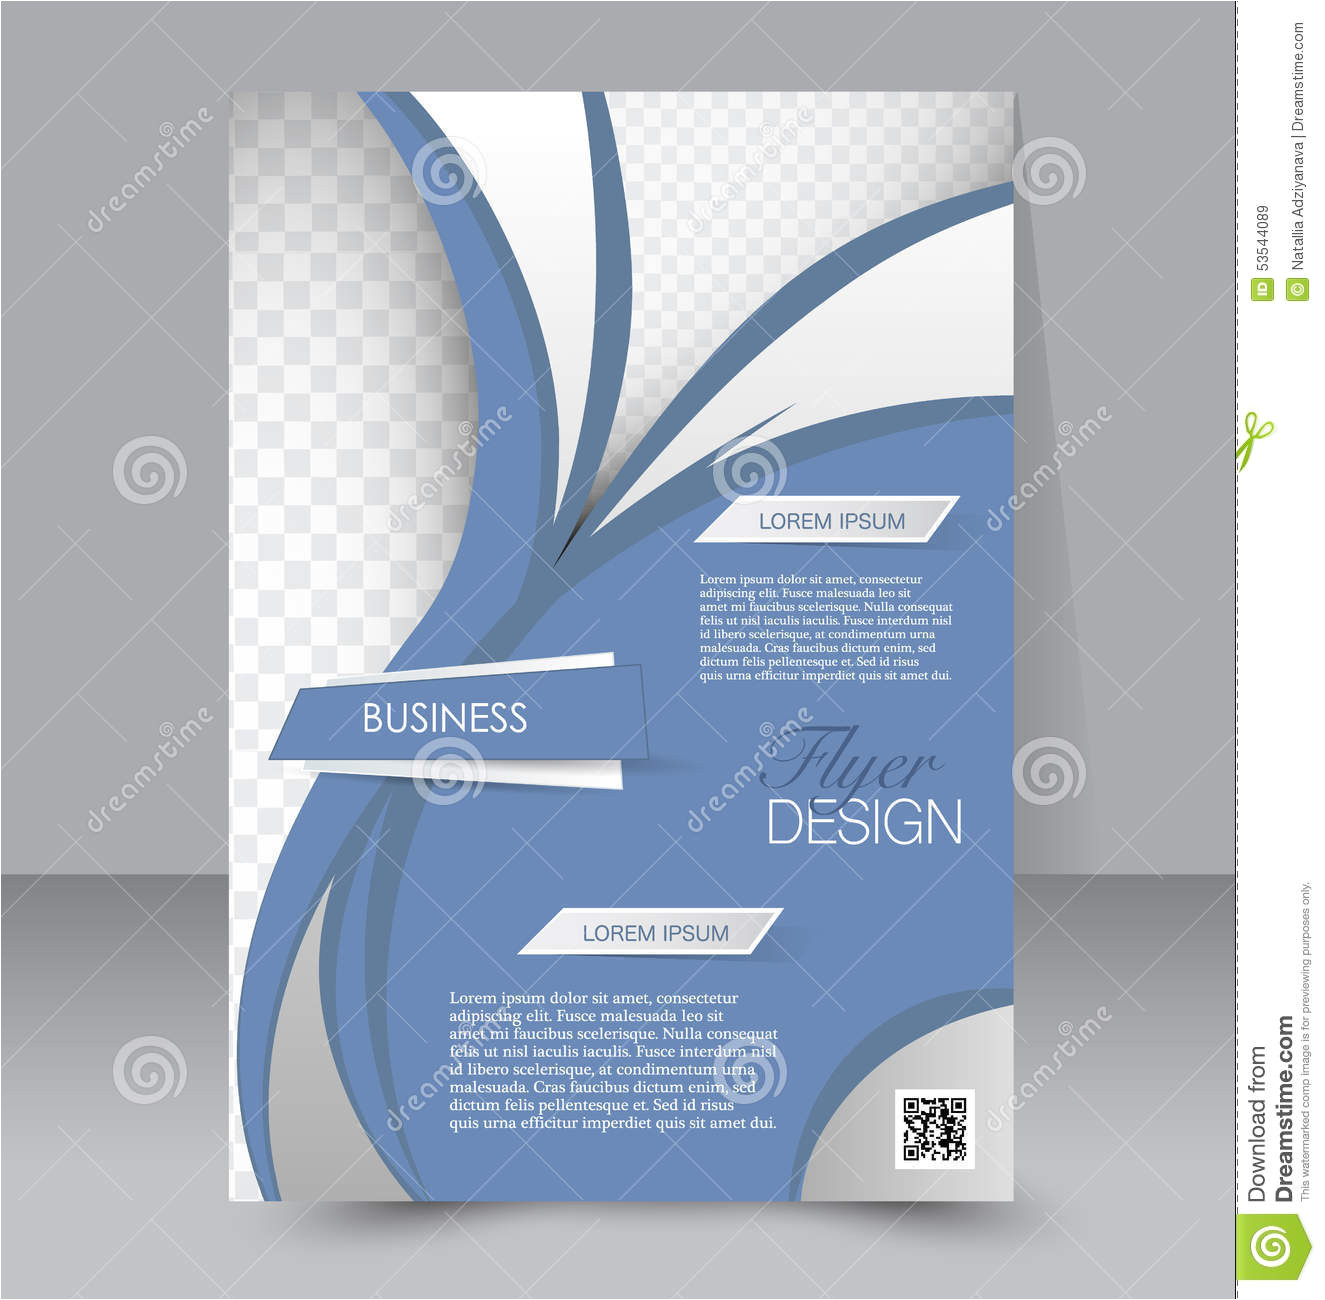 stock illustration flyer template business brochure editable poster design education presentation website magazine cover blue color image53544089